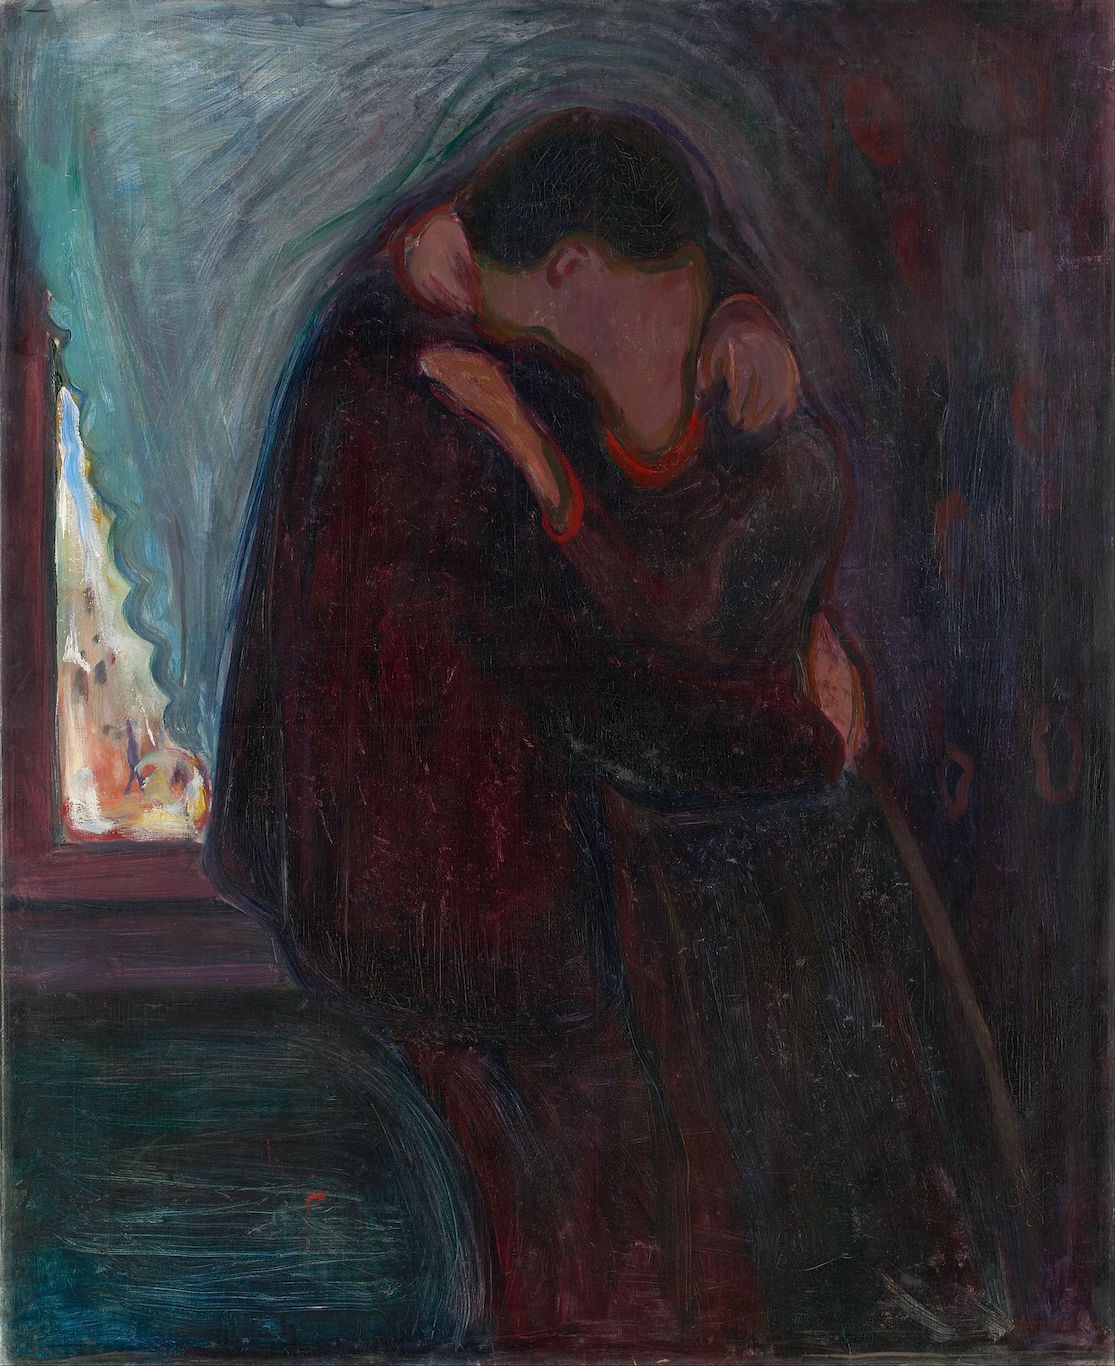 Edvard_Munch_-_The_Kiss_-_Google_Art_Project_copy.jpg